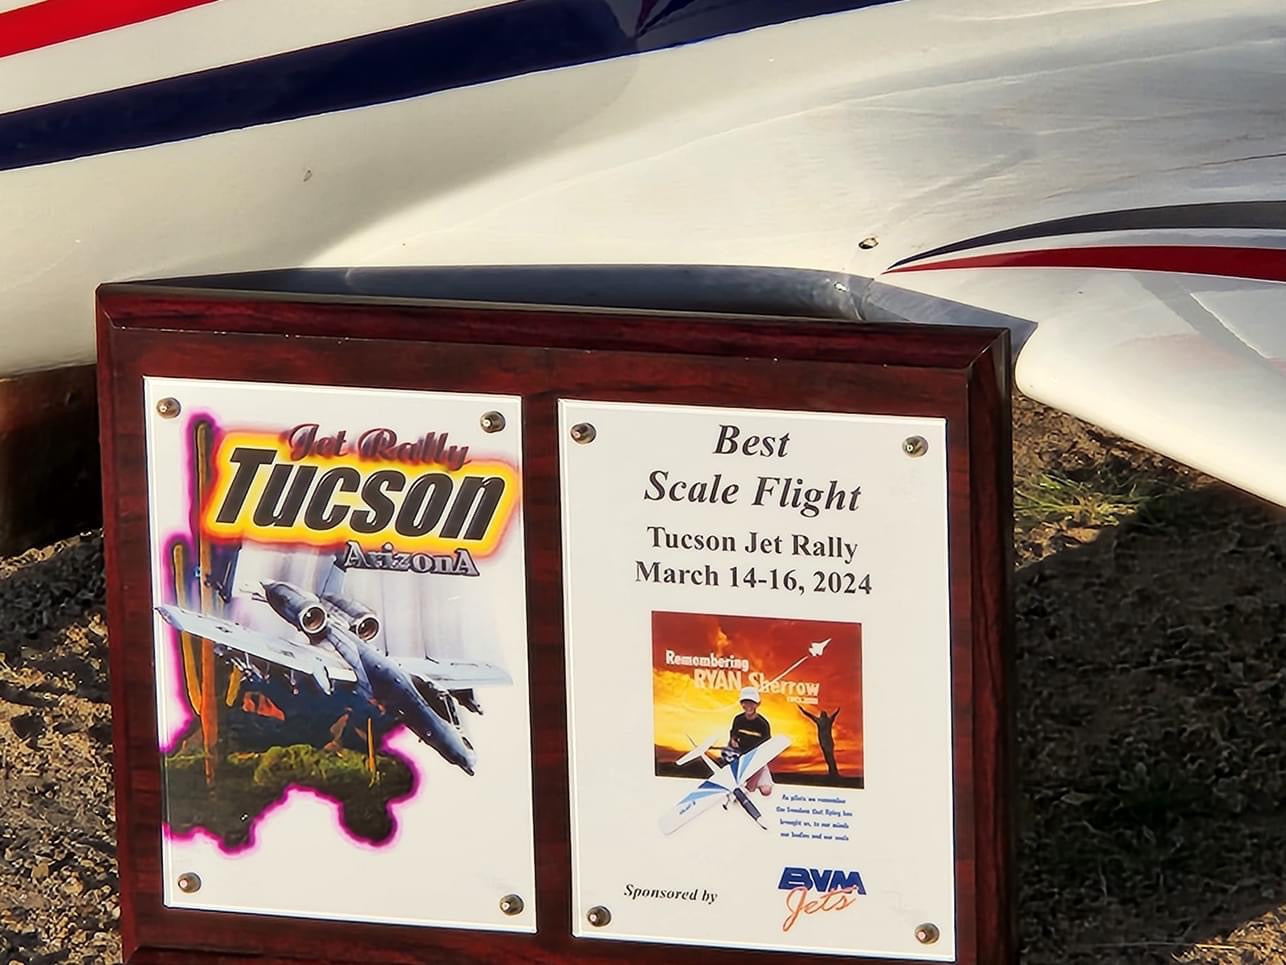 Tucson Jet Rally 2024 !!!  Best Scale Flight.